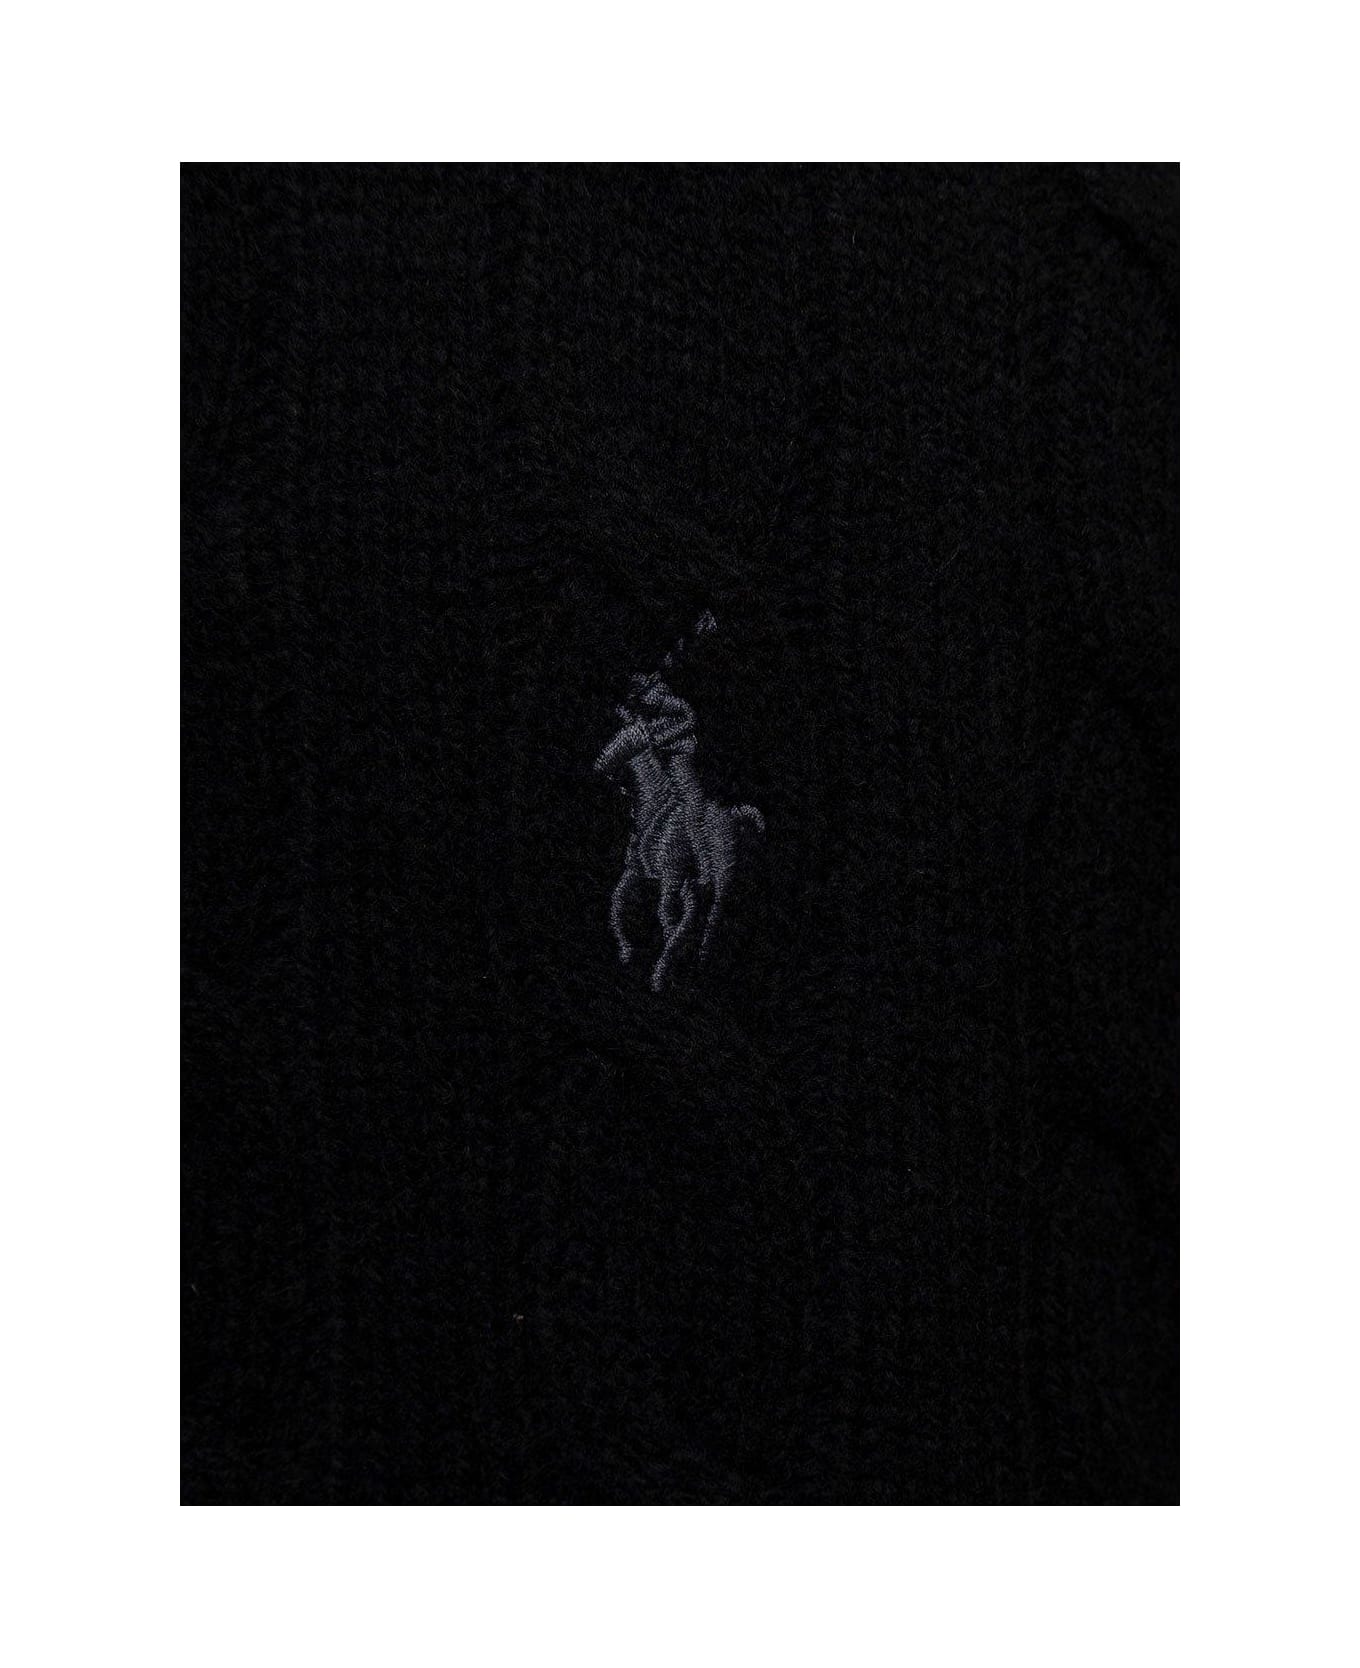 Polo Ralph Lauren Logo Embroidered High Neck Sweater - Black